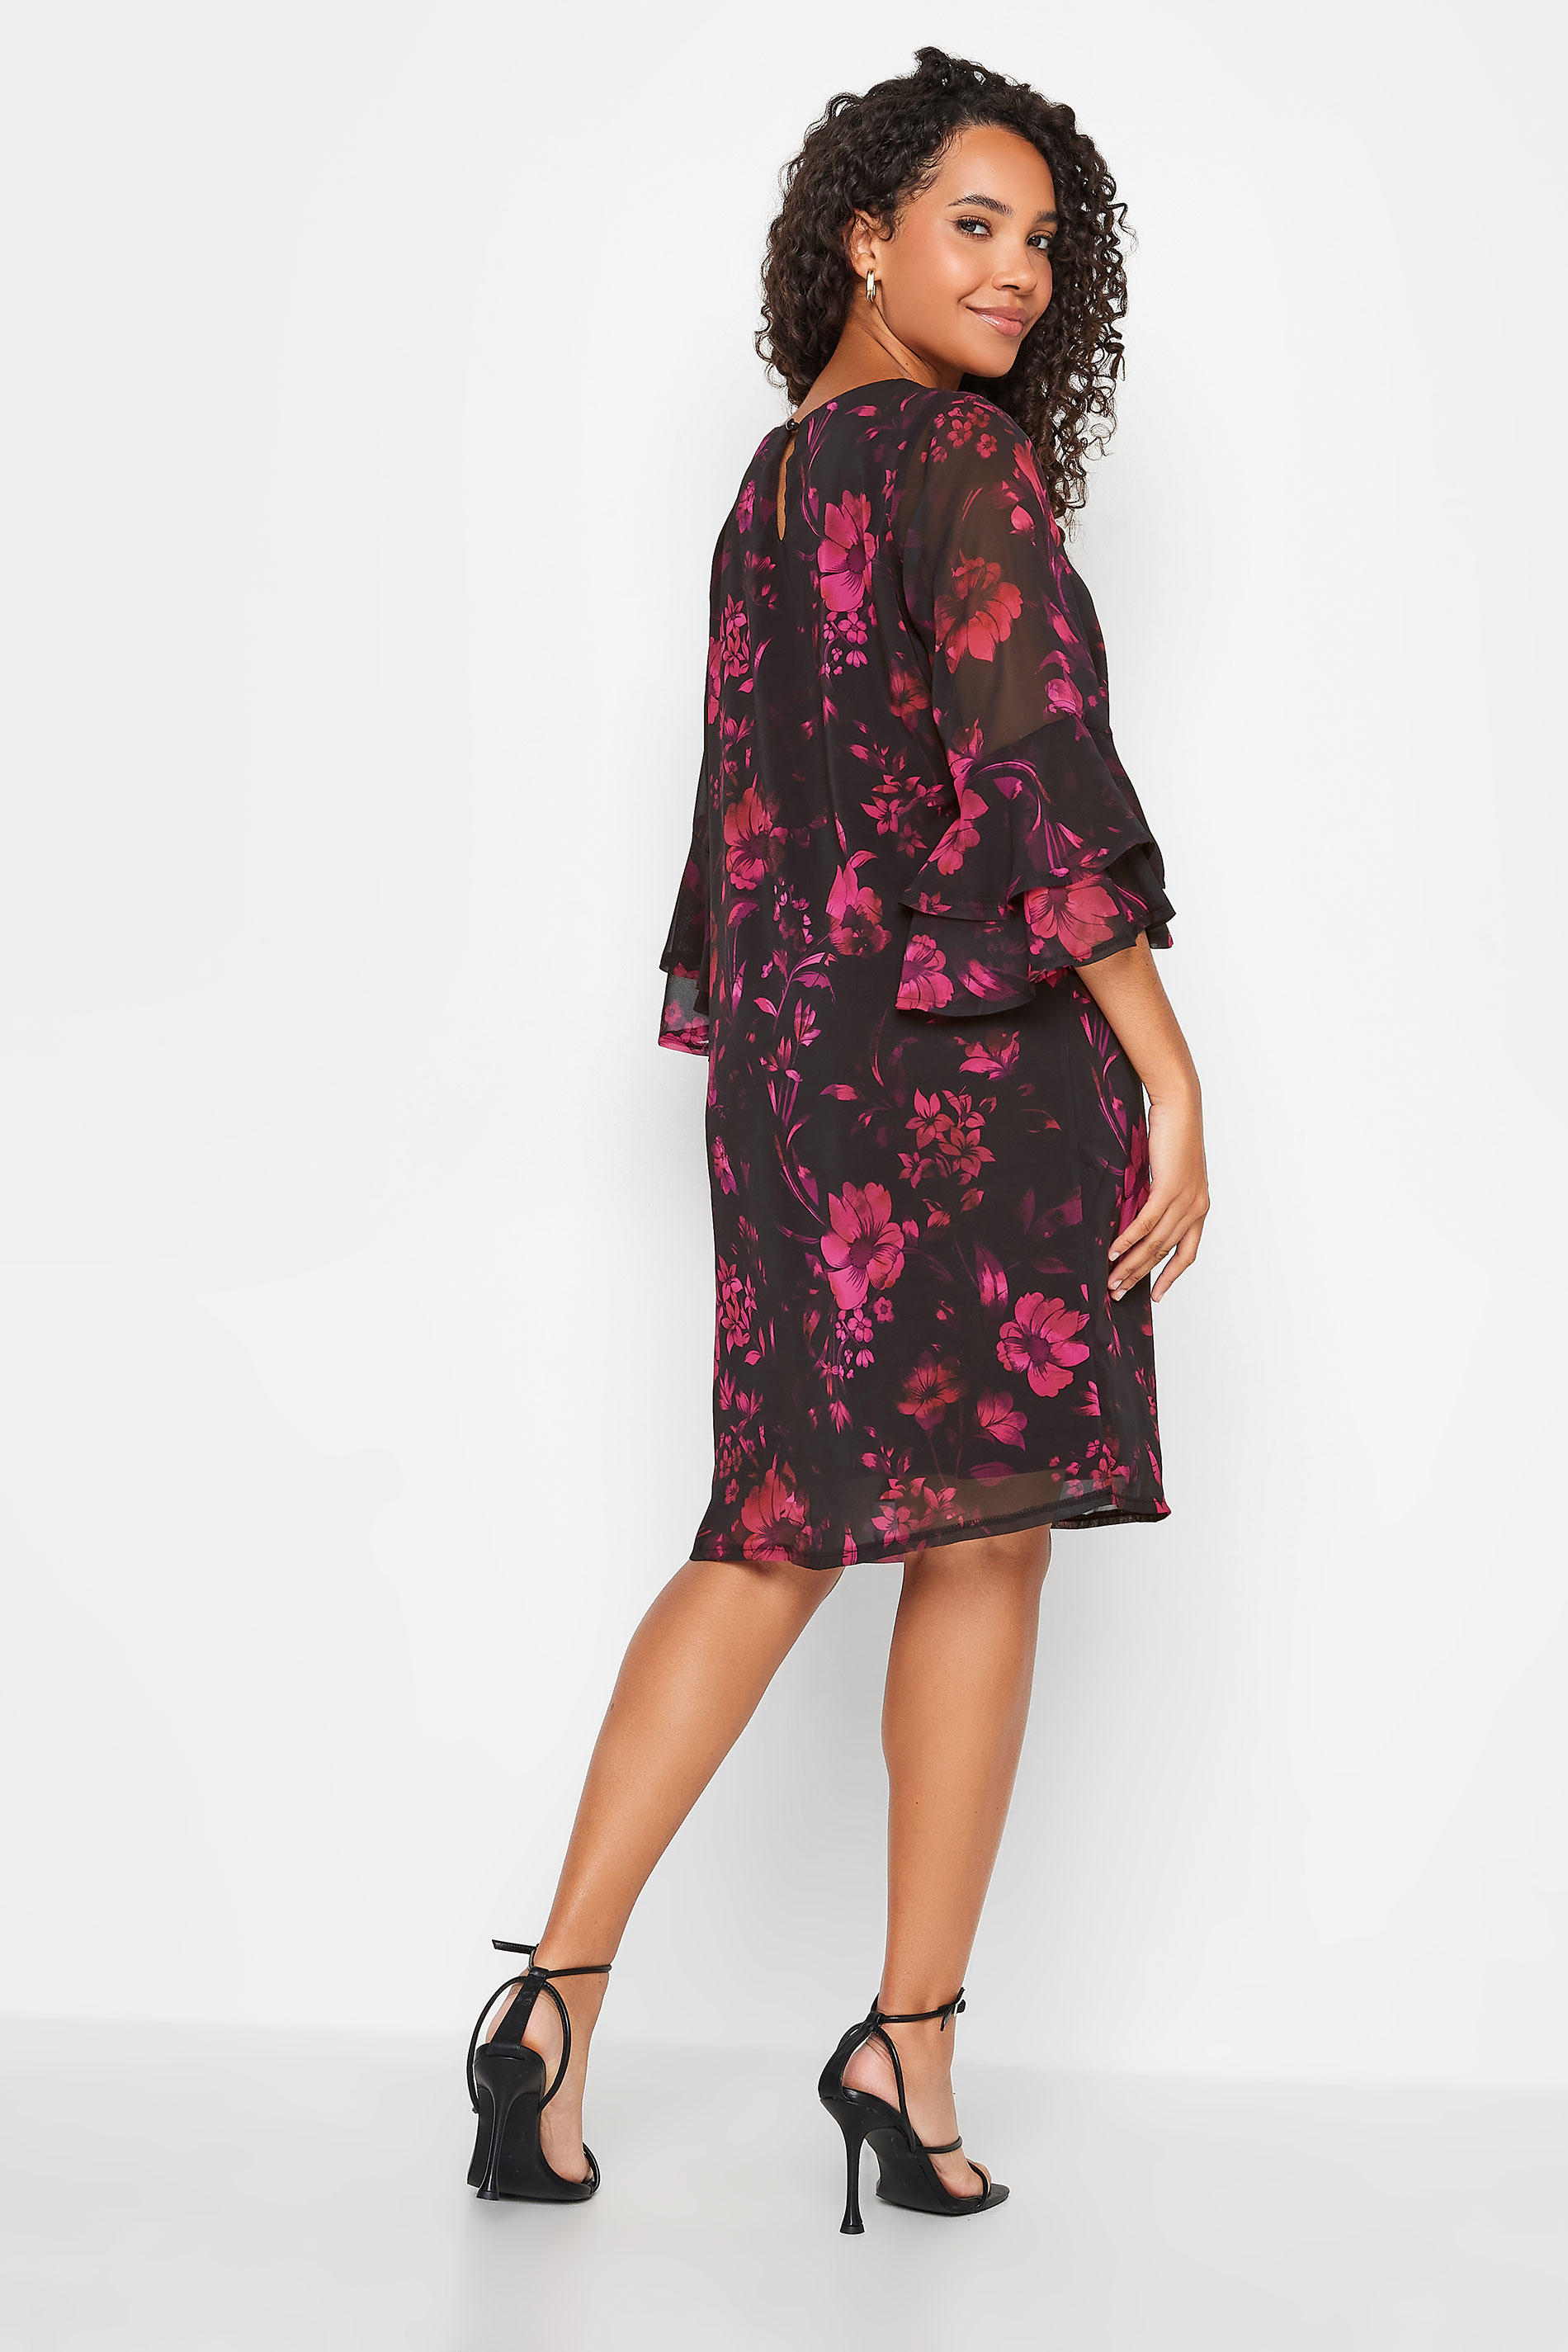 M&Co Black Floral Print Flute Sleeve Shift Dress | M&Co